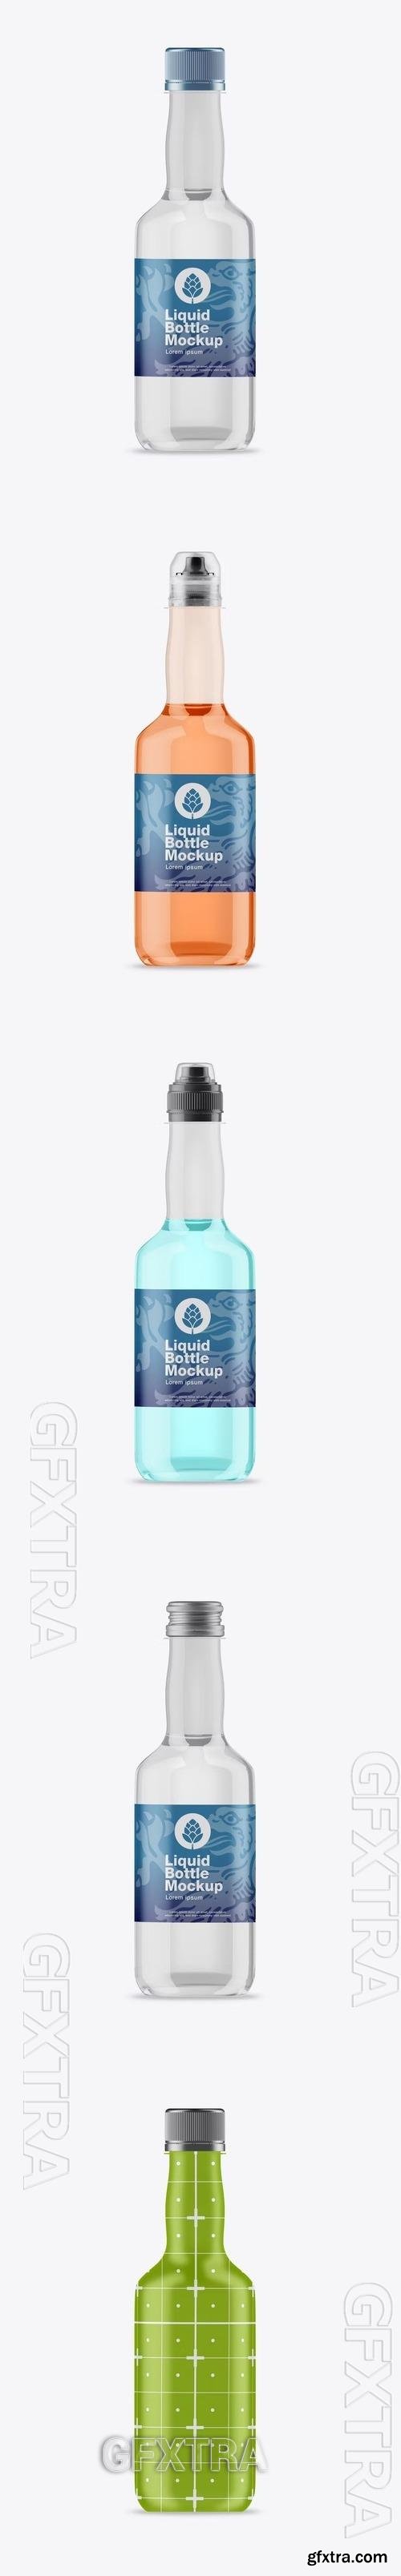 Liquid Bottle with 5 Caps Mockup 79GR3ZV